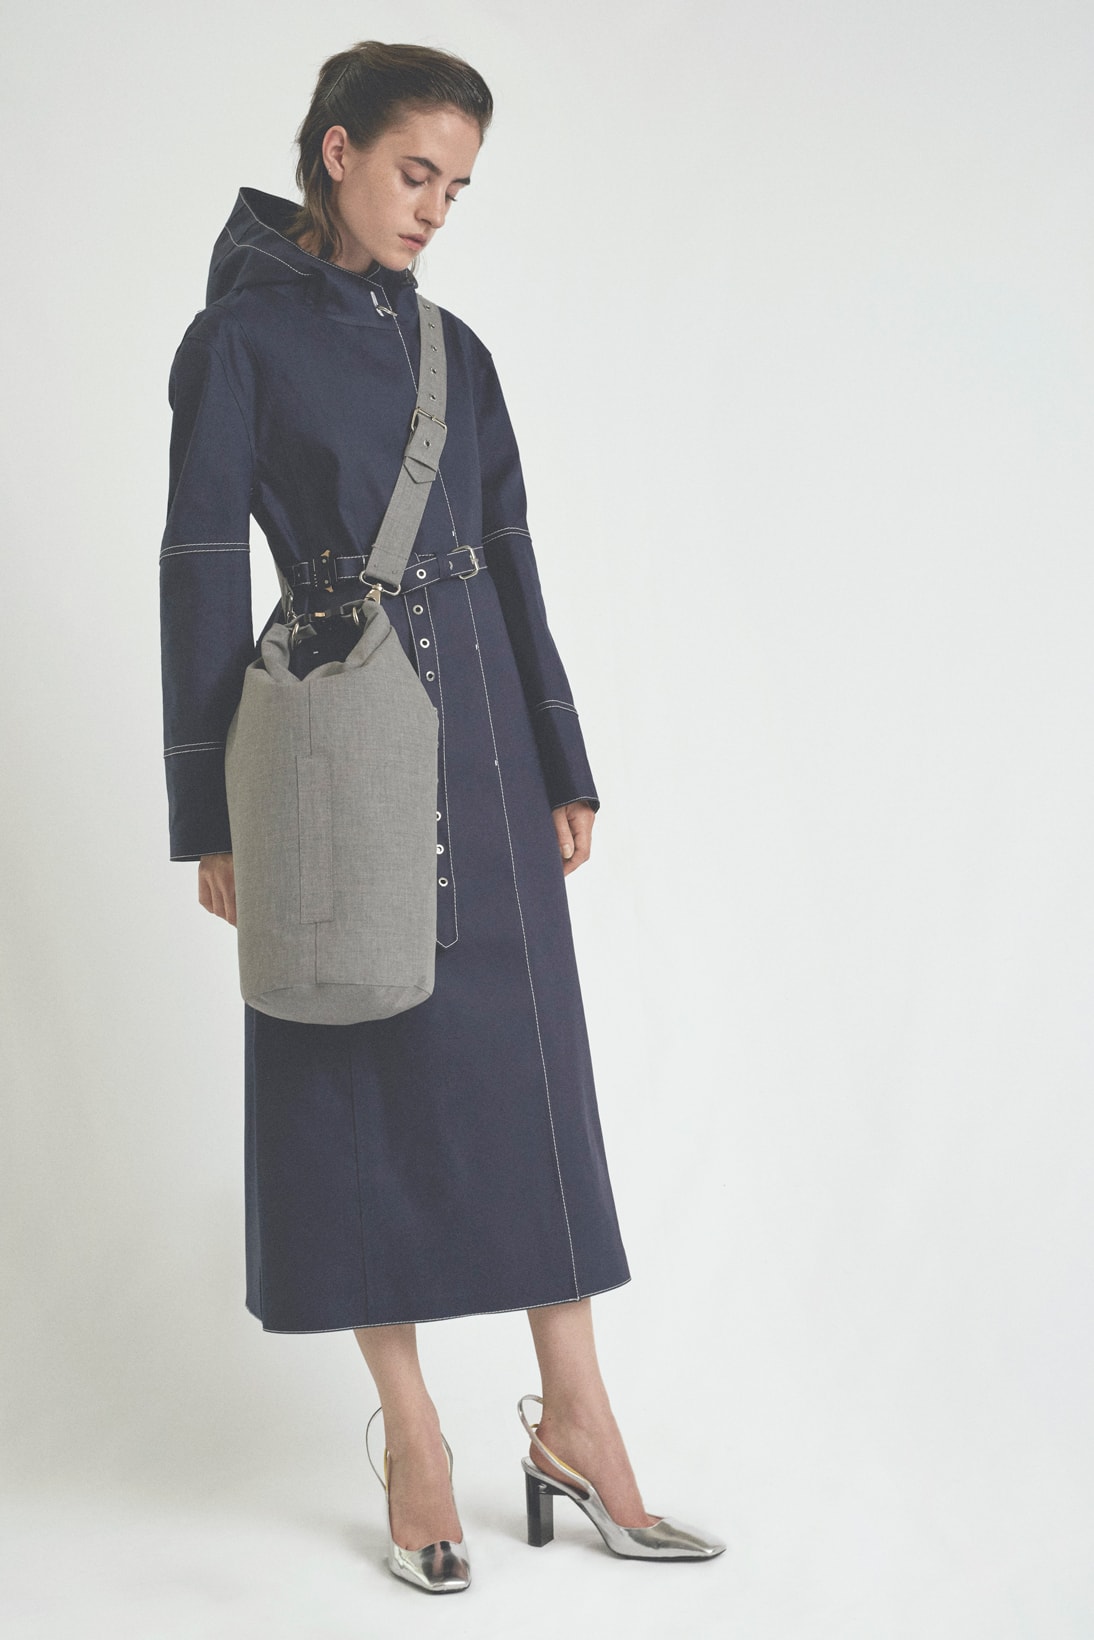 ALYX Mackintosh 2018 Spring Summer Collaboration Outerwear Raincoats bags belts accessories treatment dye matthew williams